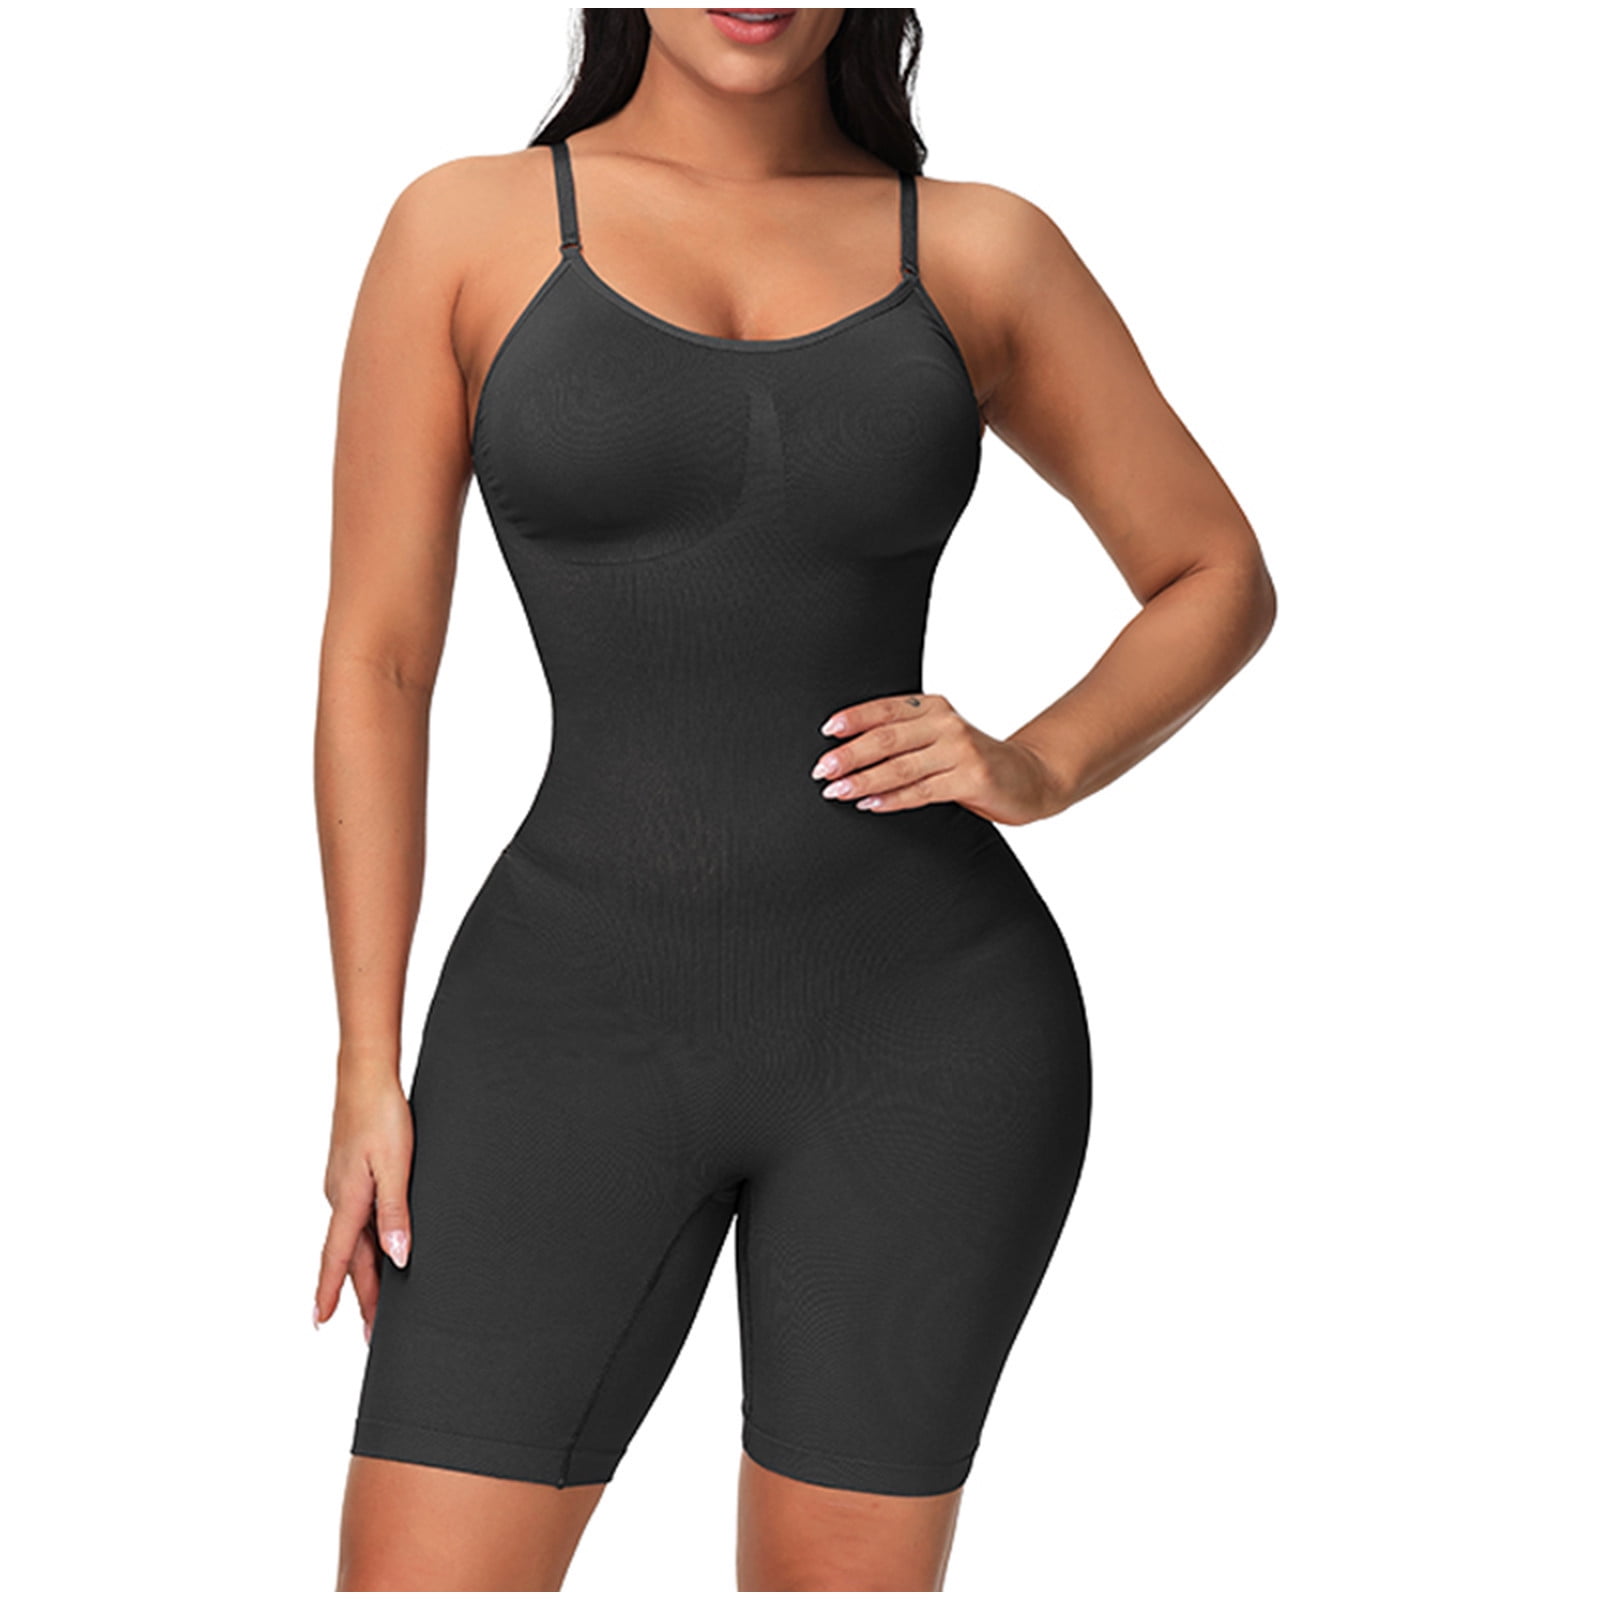 Skims Shapewear for Women Volcanic Energy Stone Bodysuit Compression Shirt  Seamless Open Crotch Full Body Shaper (Color : Skin, Size : M/Medium)